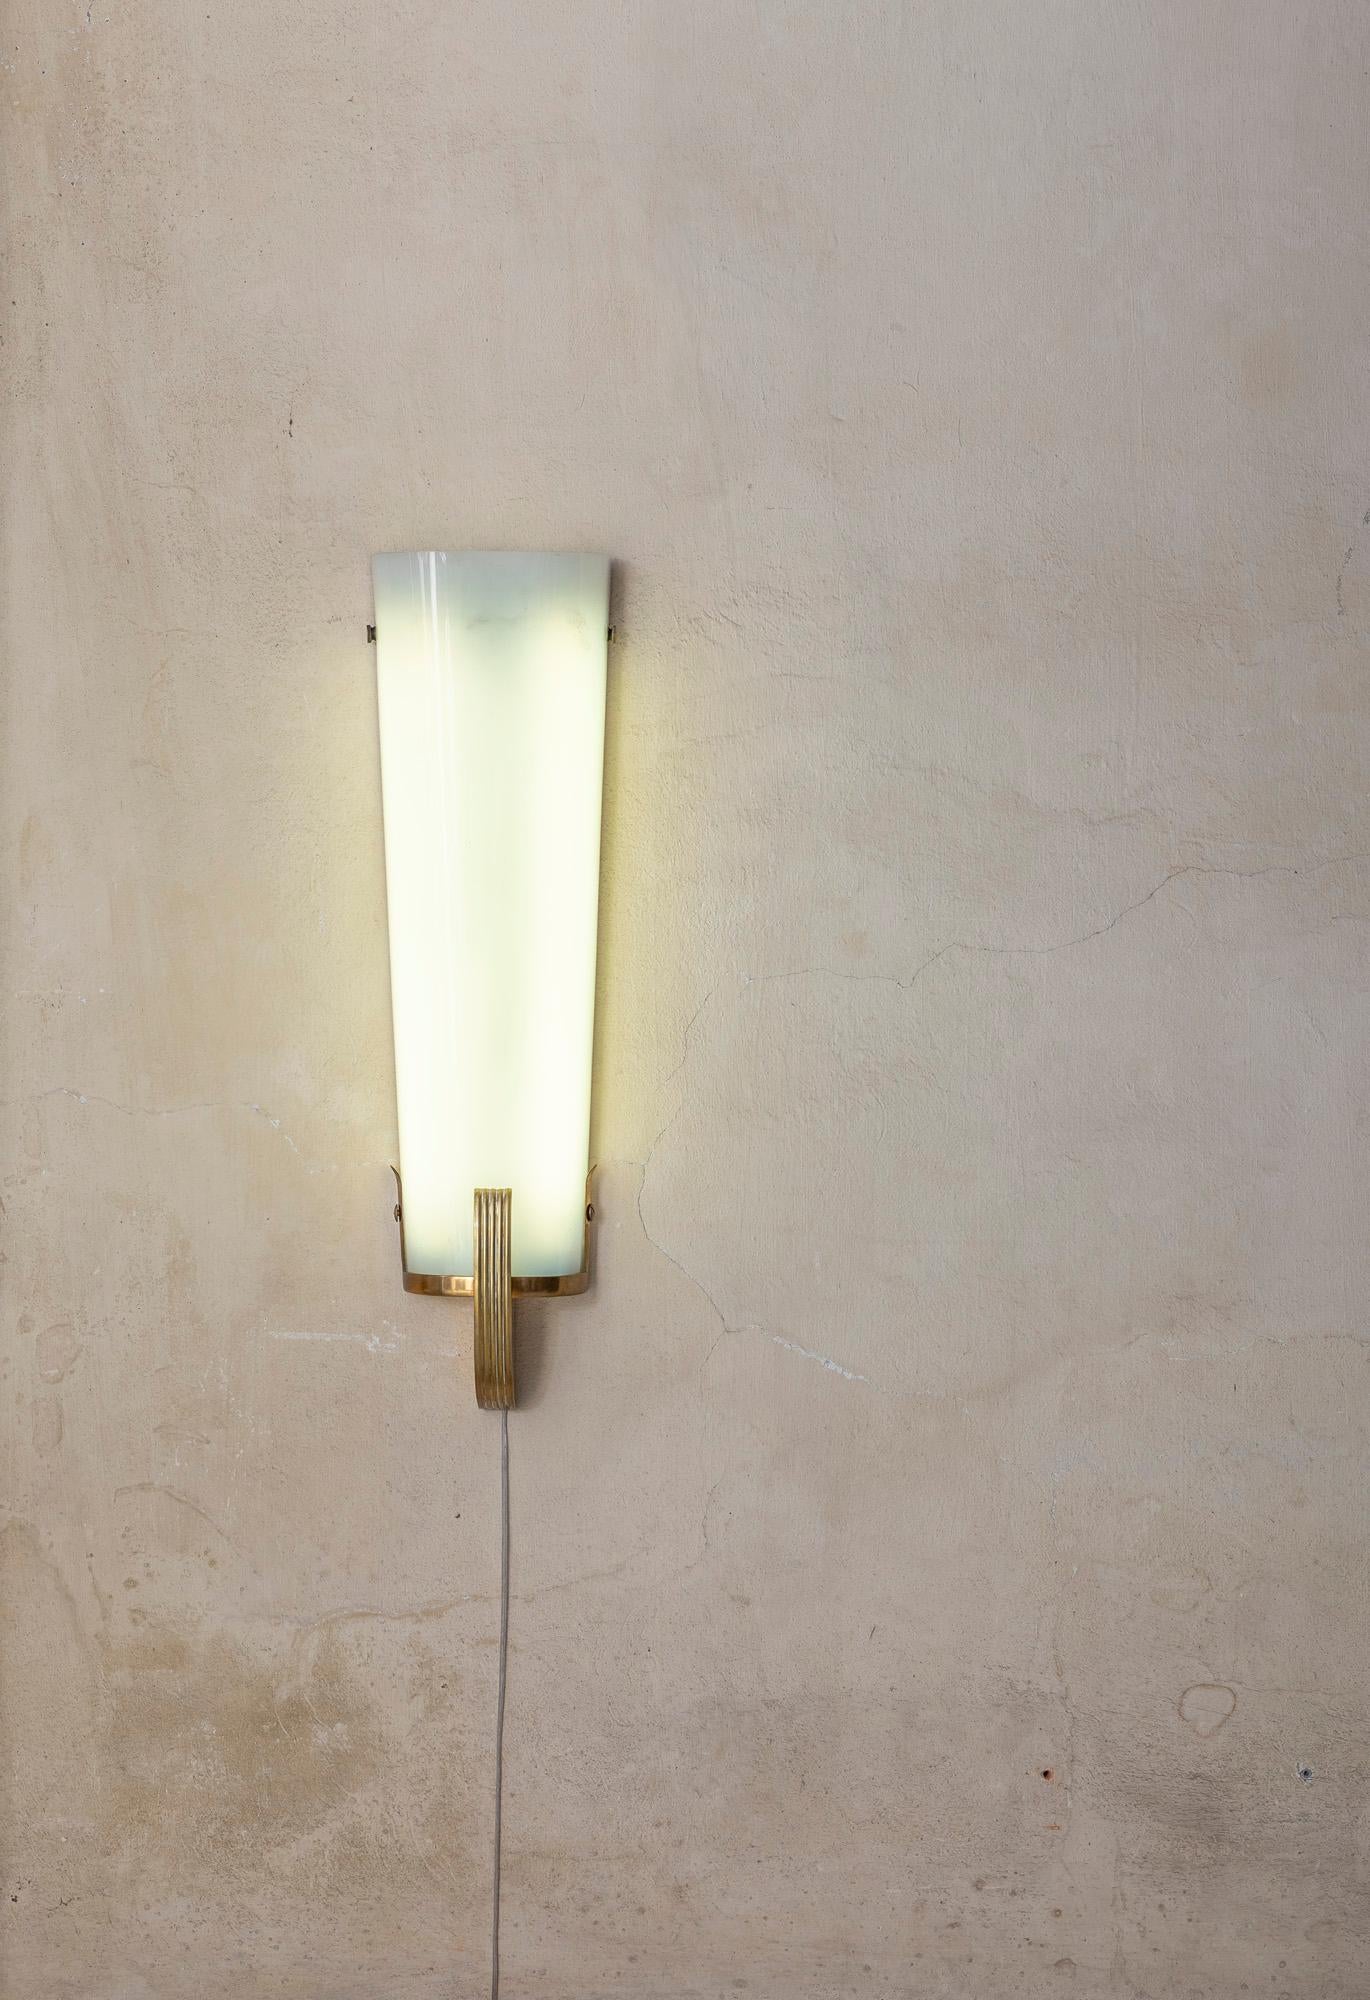 Huge brass and perspex wall light.
Elegant shape.